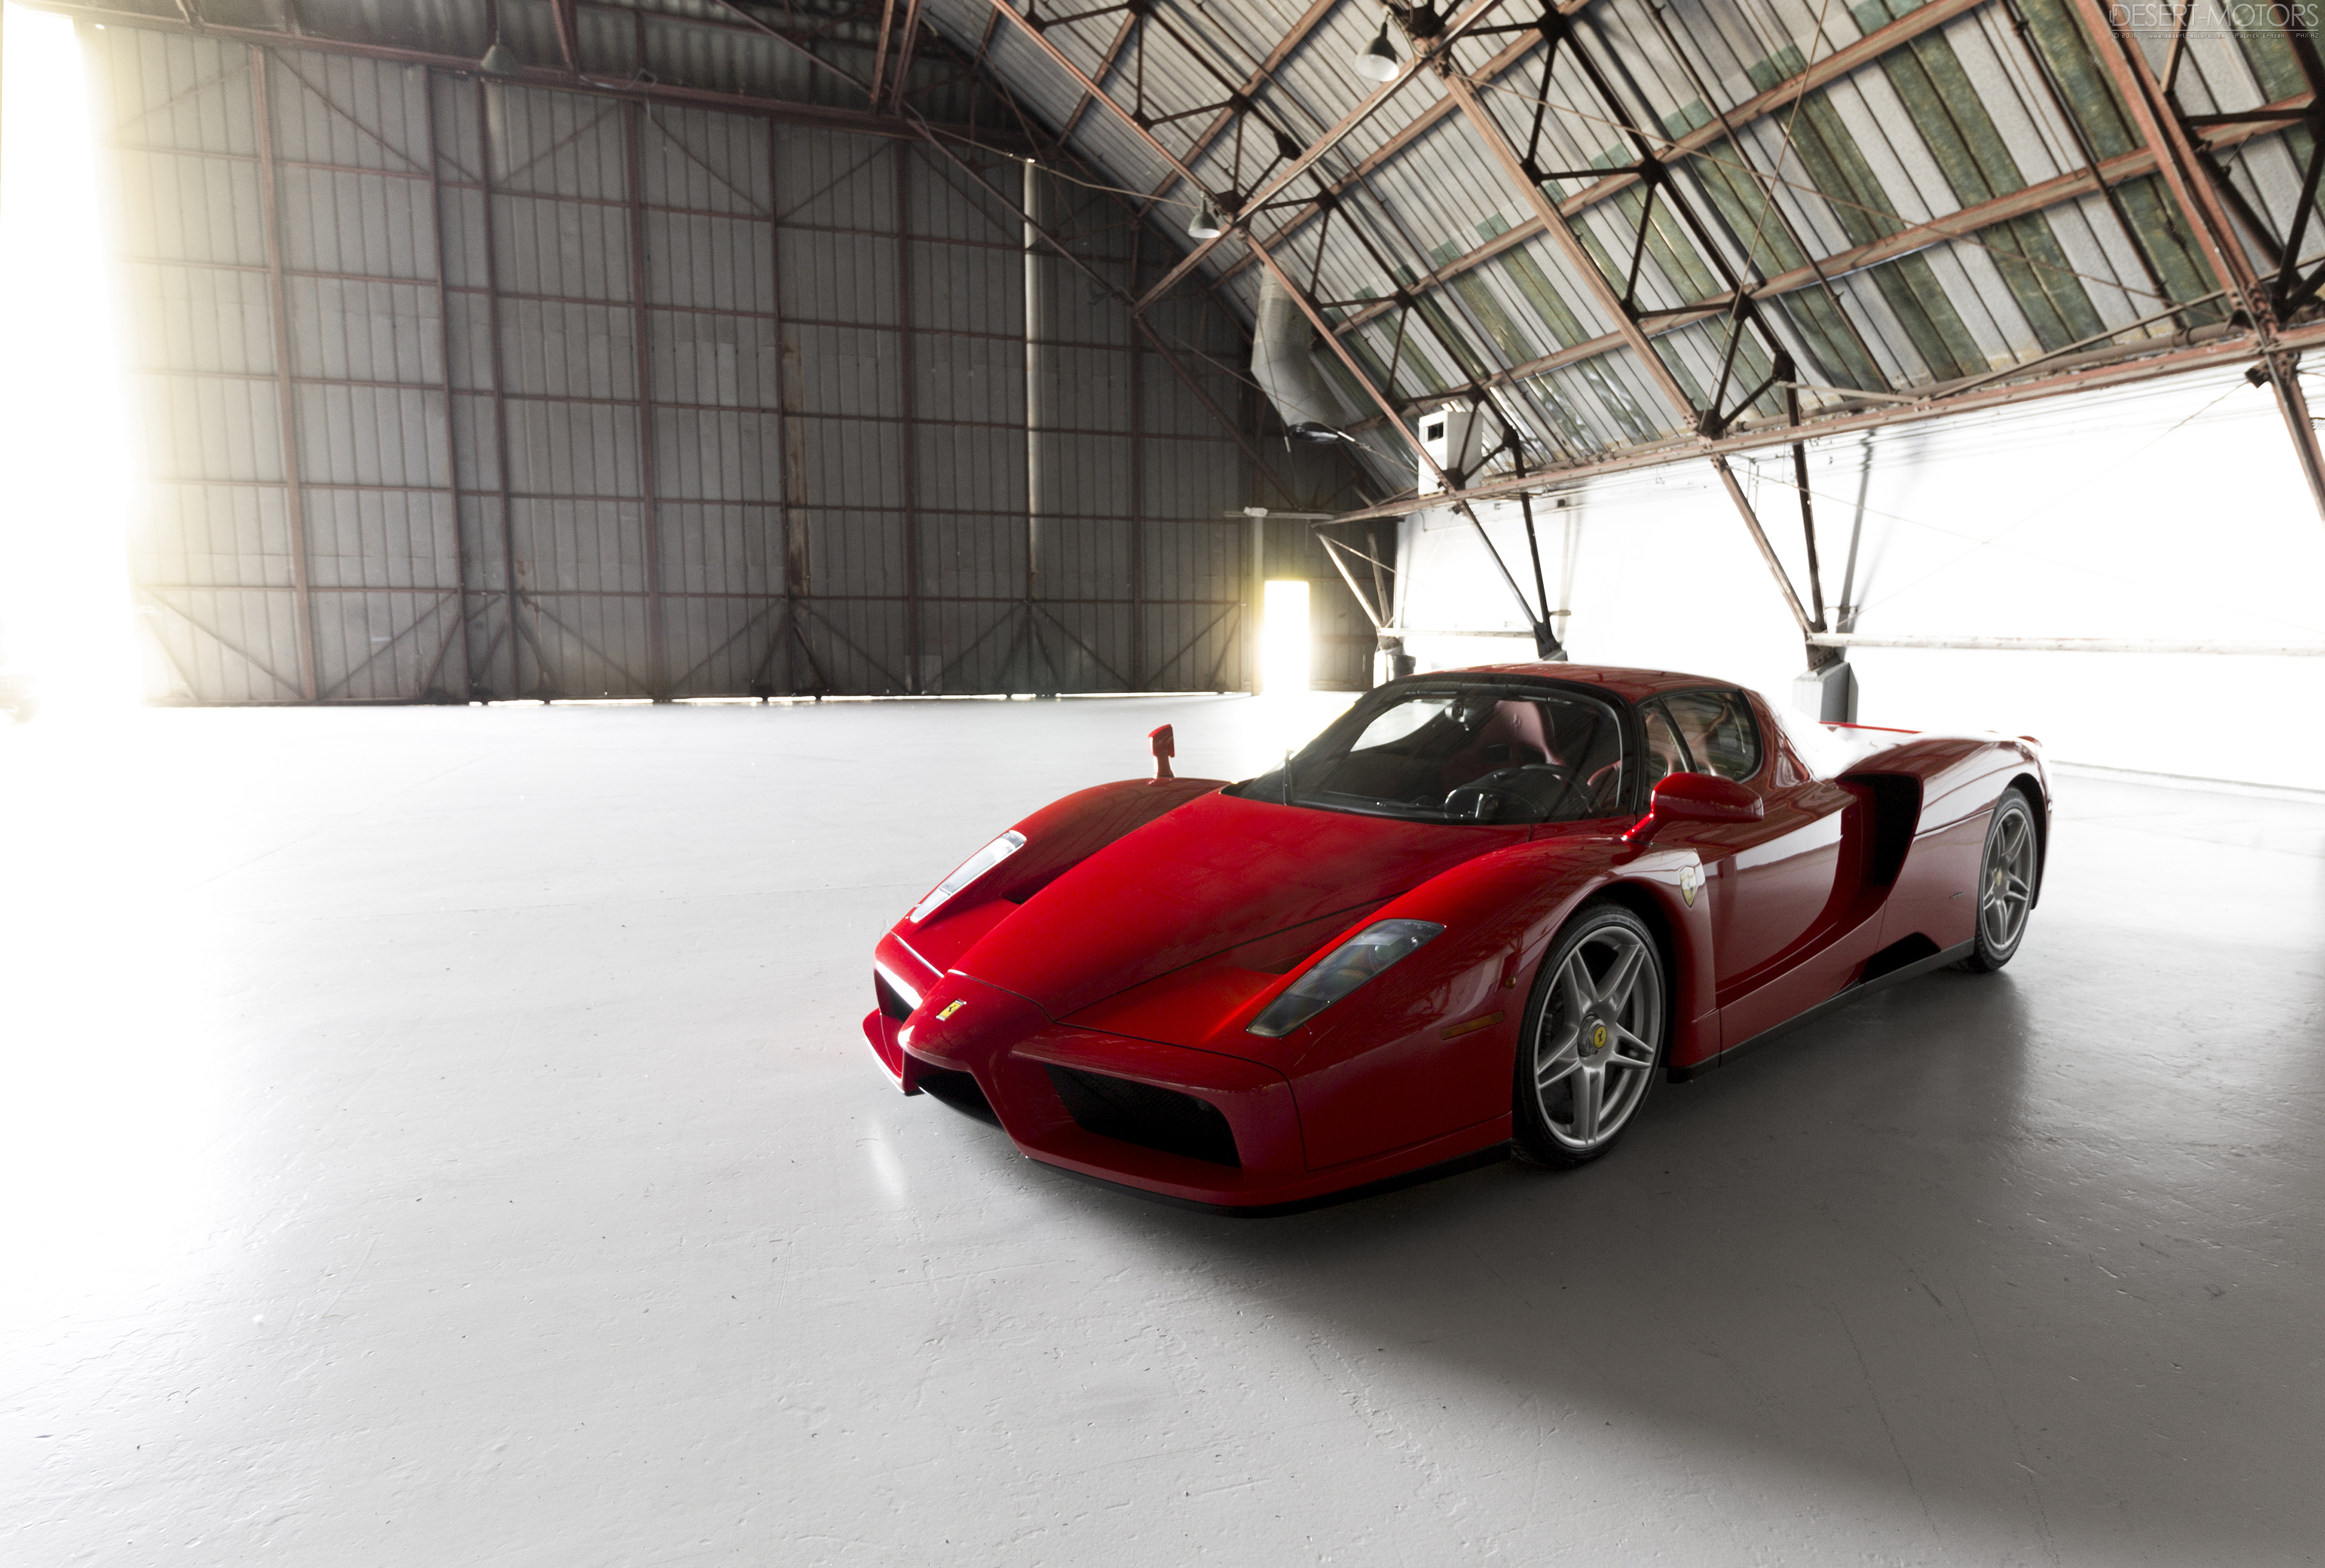 General 3840x2590 Ferrari Enzo Ferrari red cars sports car italian cars car vehicle Stellantis